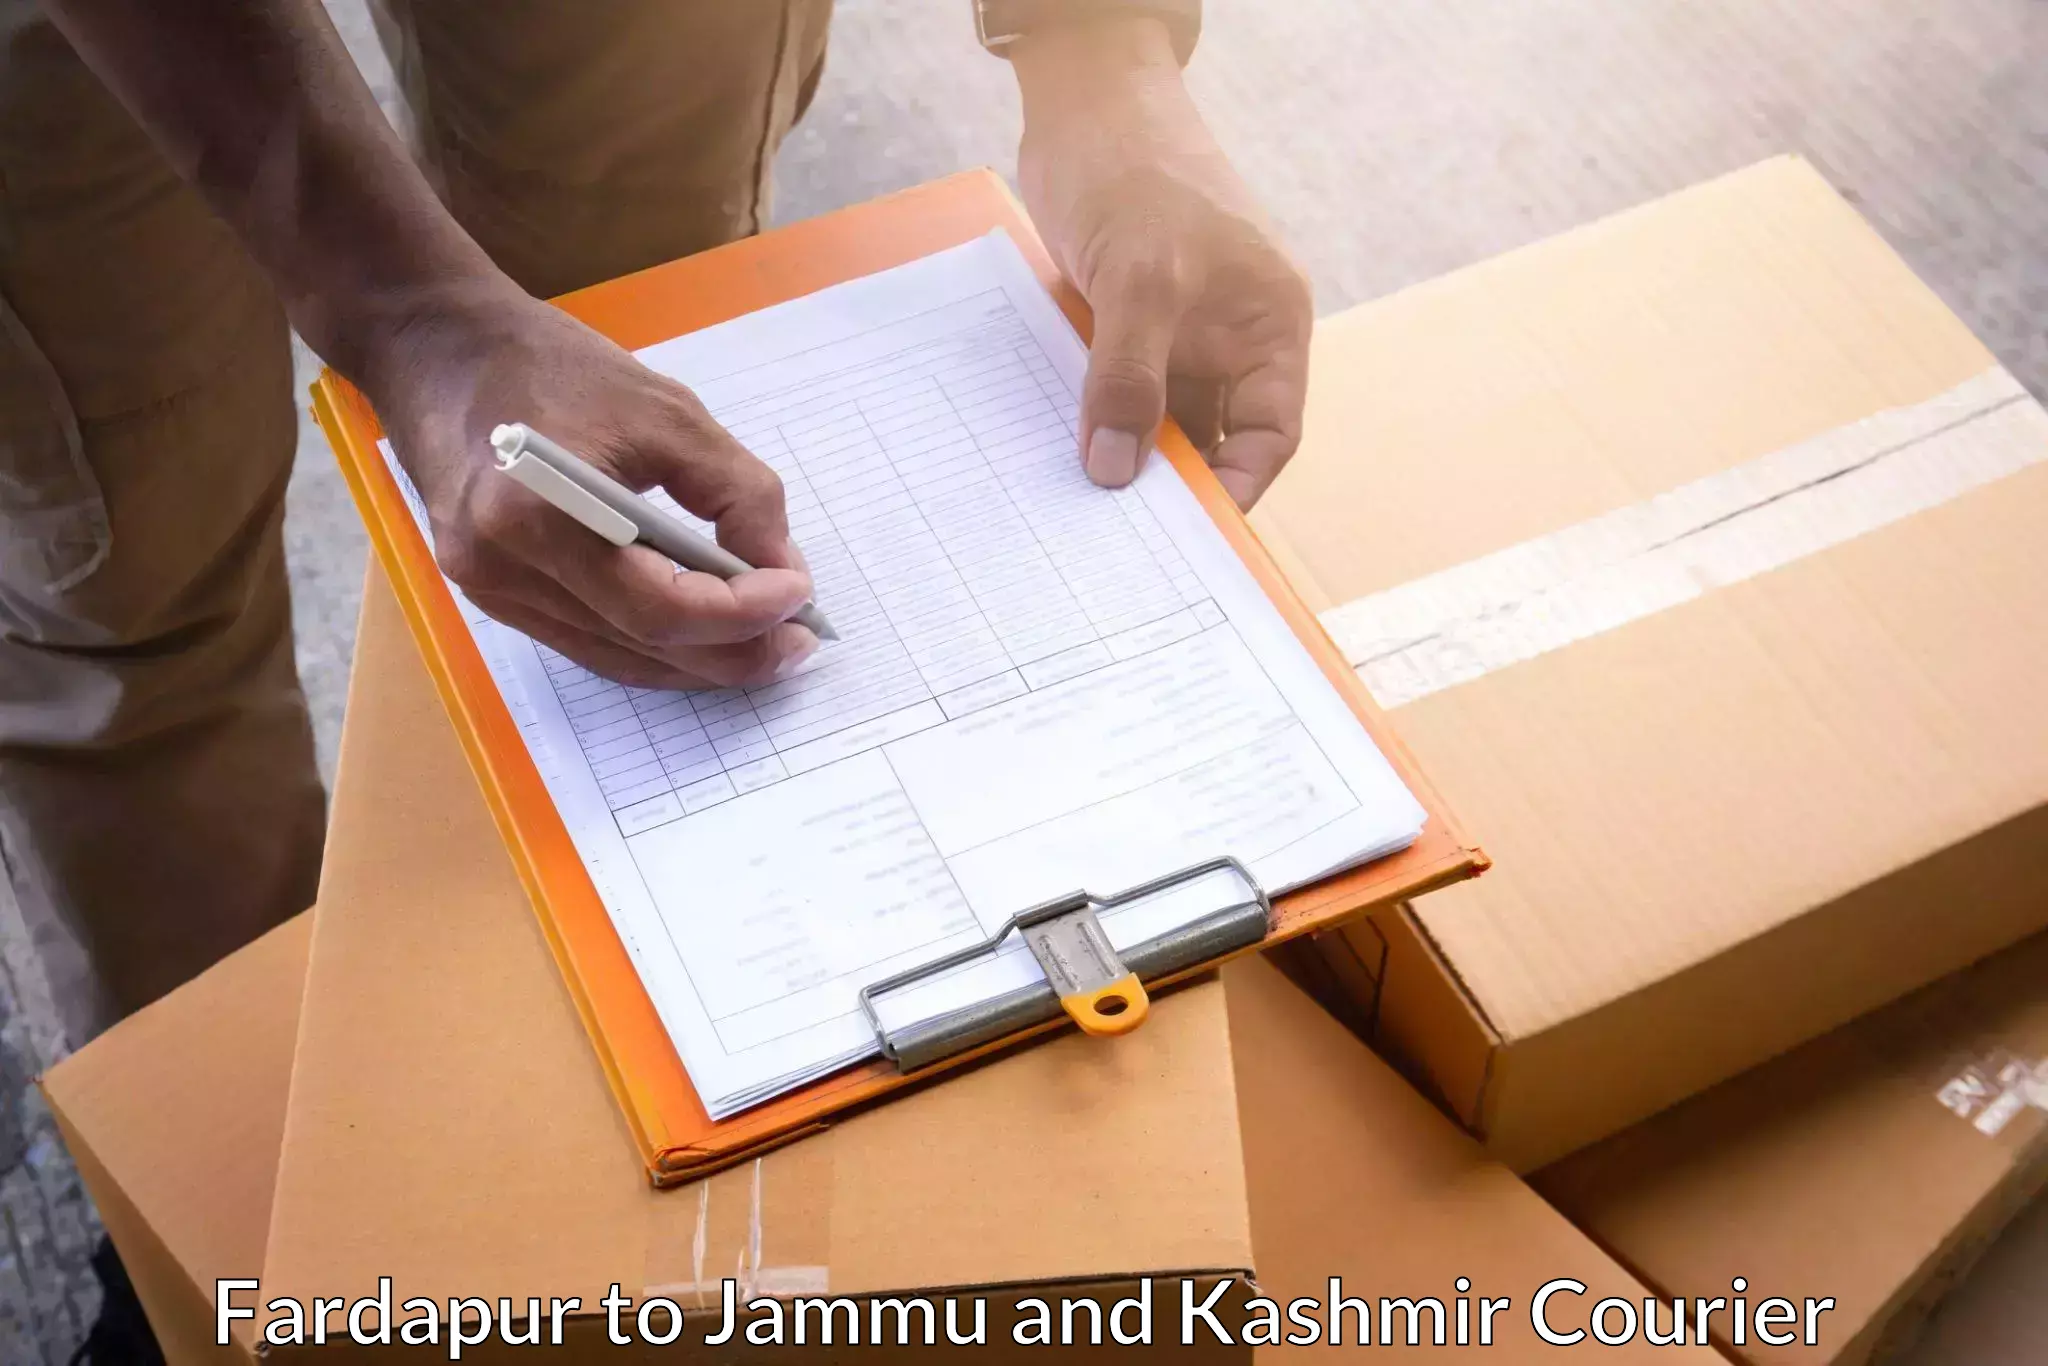 Speedy delivery service Fardapur to University of Jammu